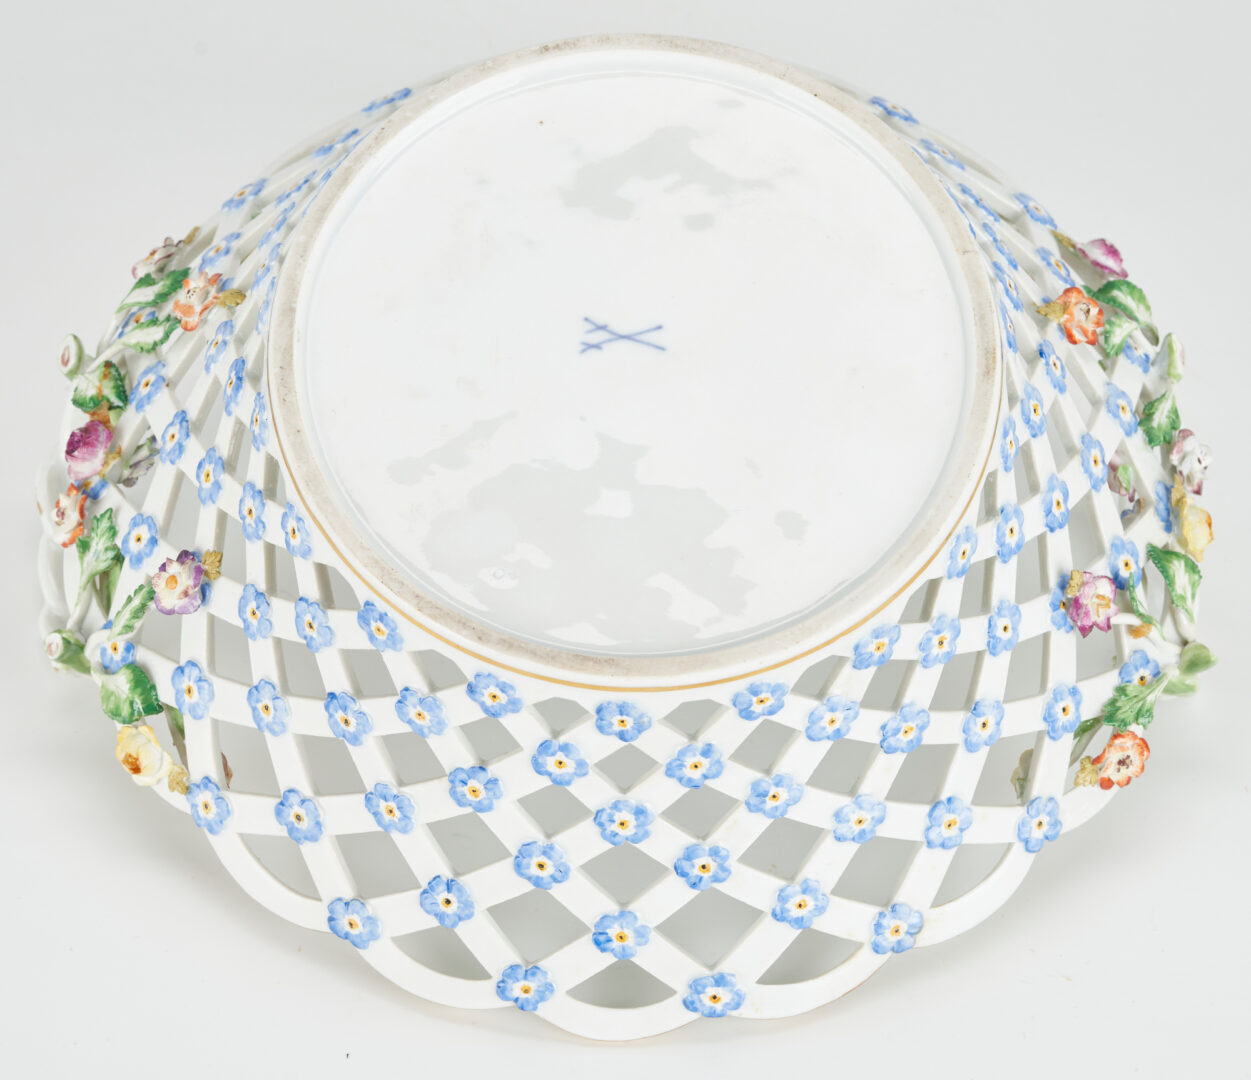 Lot 915: 3 Reticulated Porcelain Baskets, KPM & Meissen